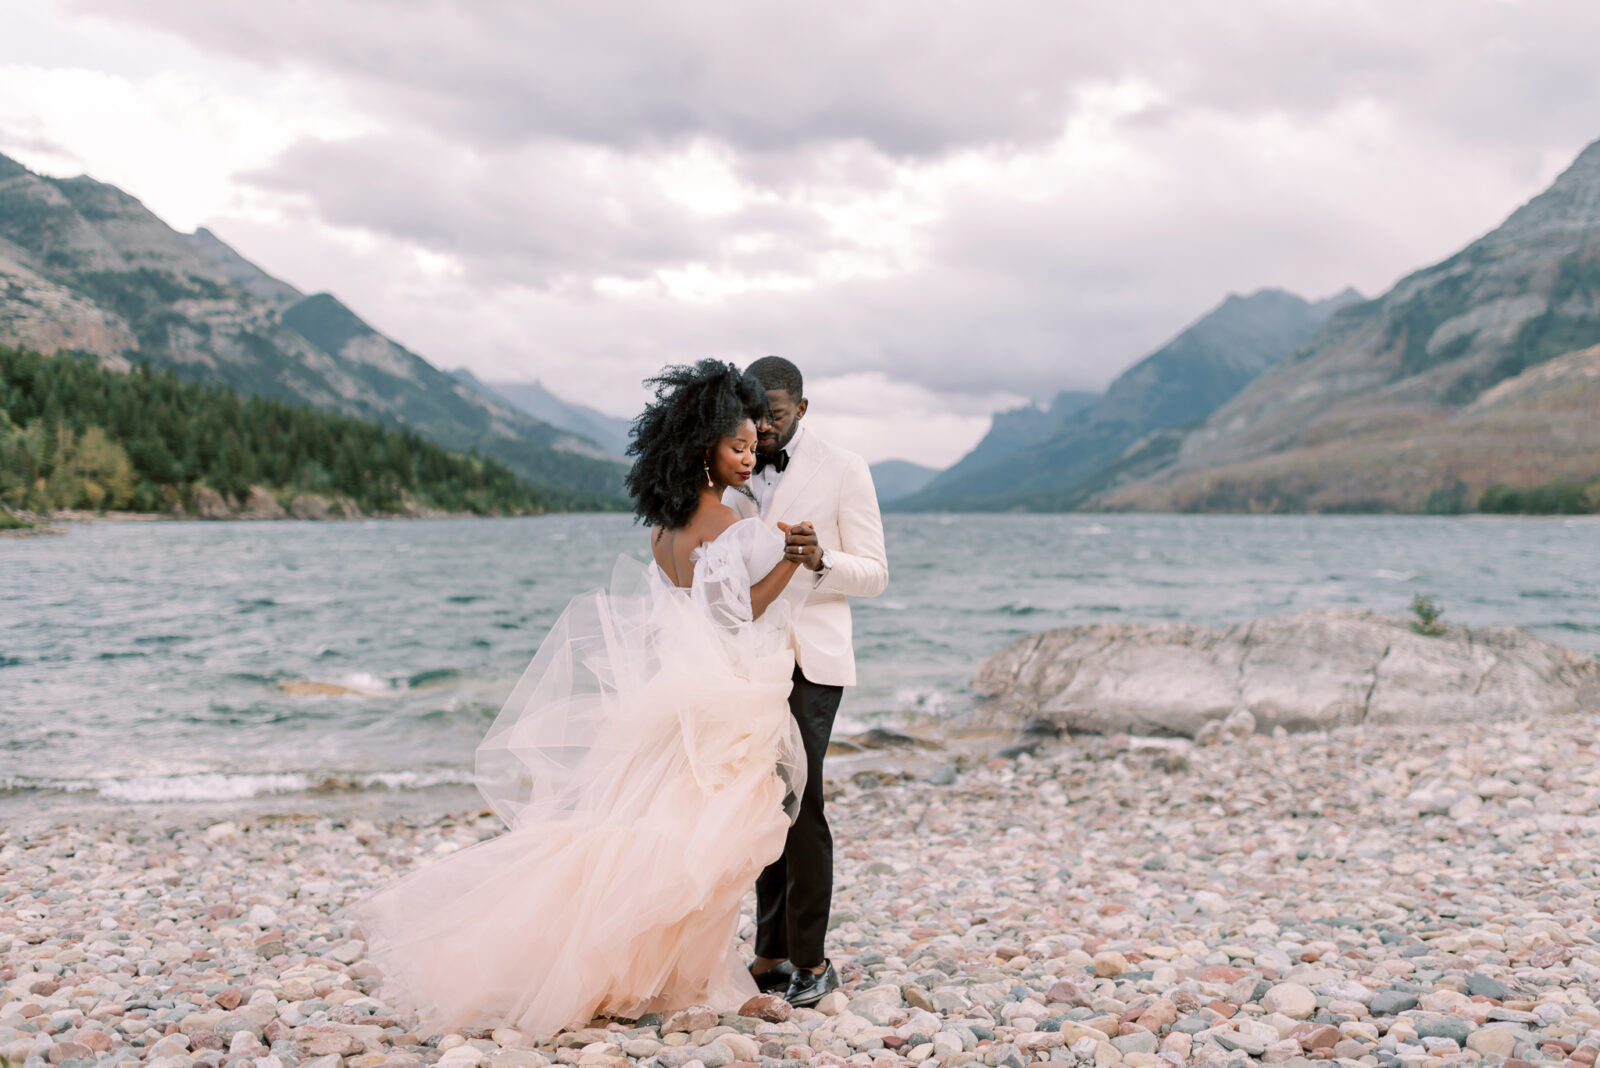 Intimate Elopement in Waterton Alberta, bride wearing blush wedding dress by Alexandra Victoria Rose, mountain lakeside couples portrait inspiration